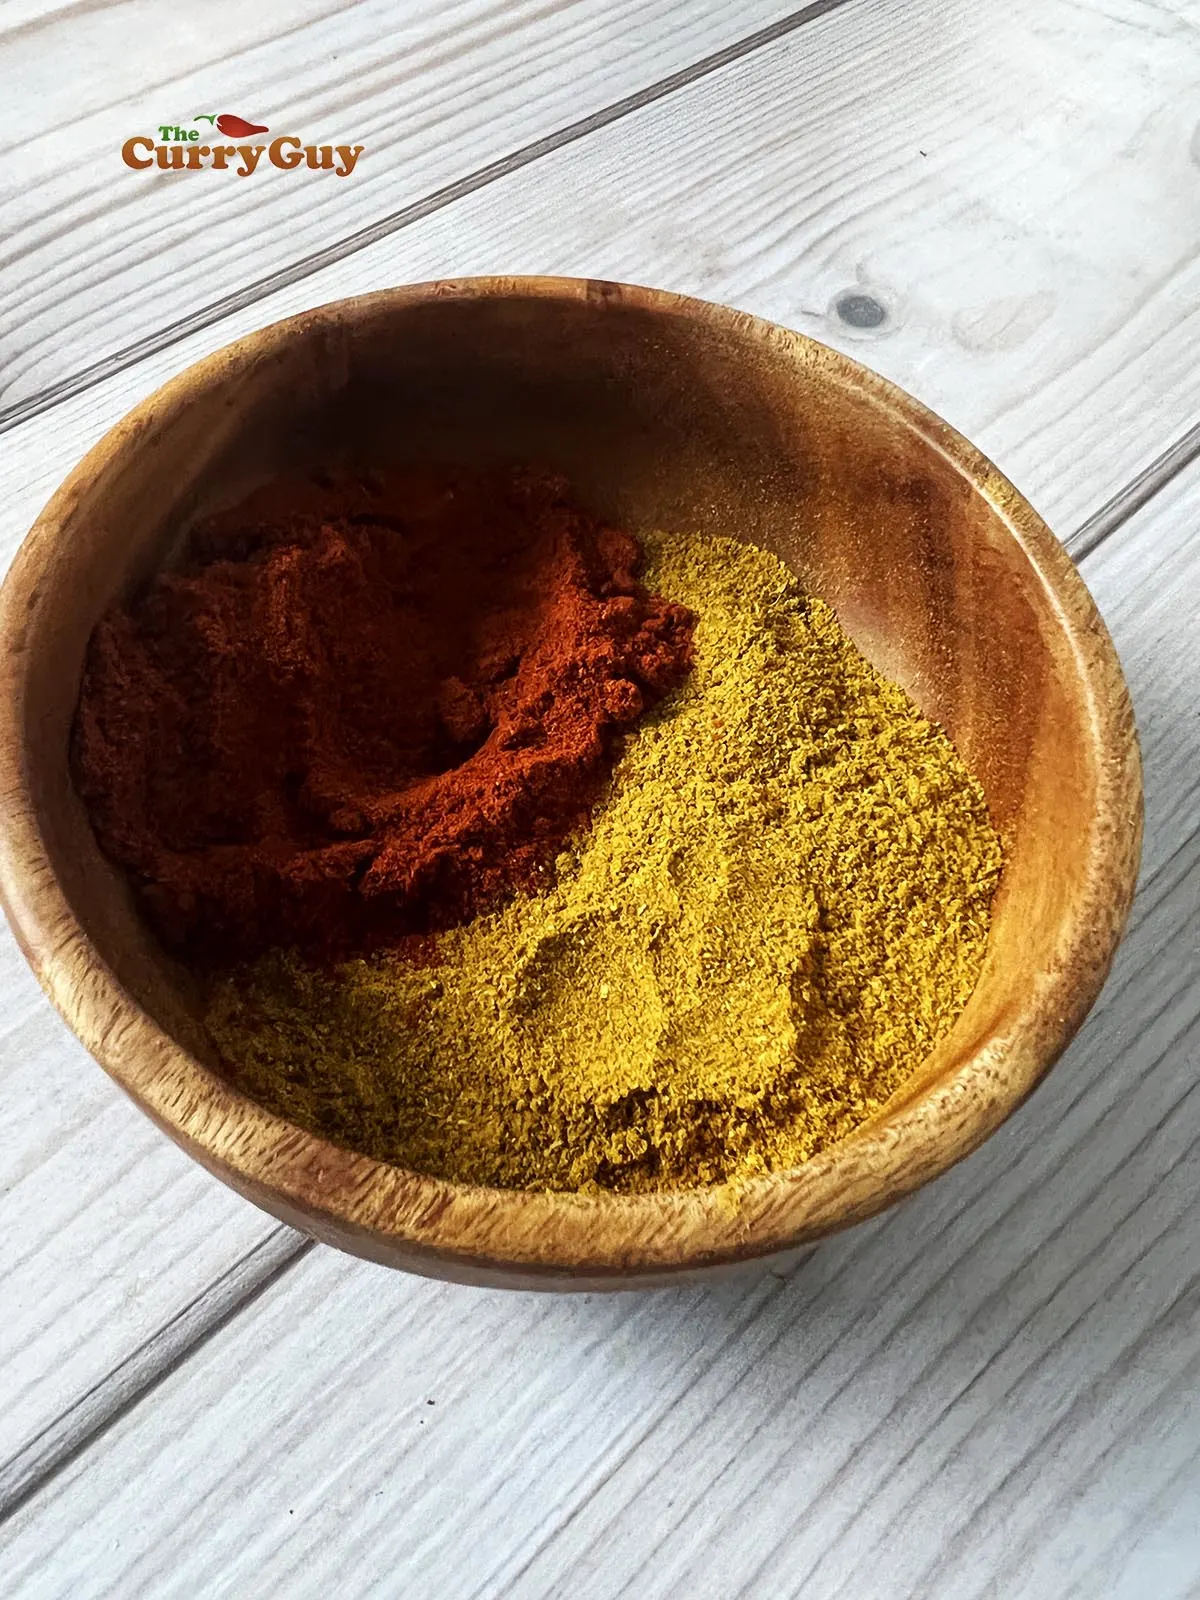 Curry powder and chili powder